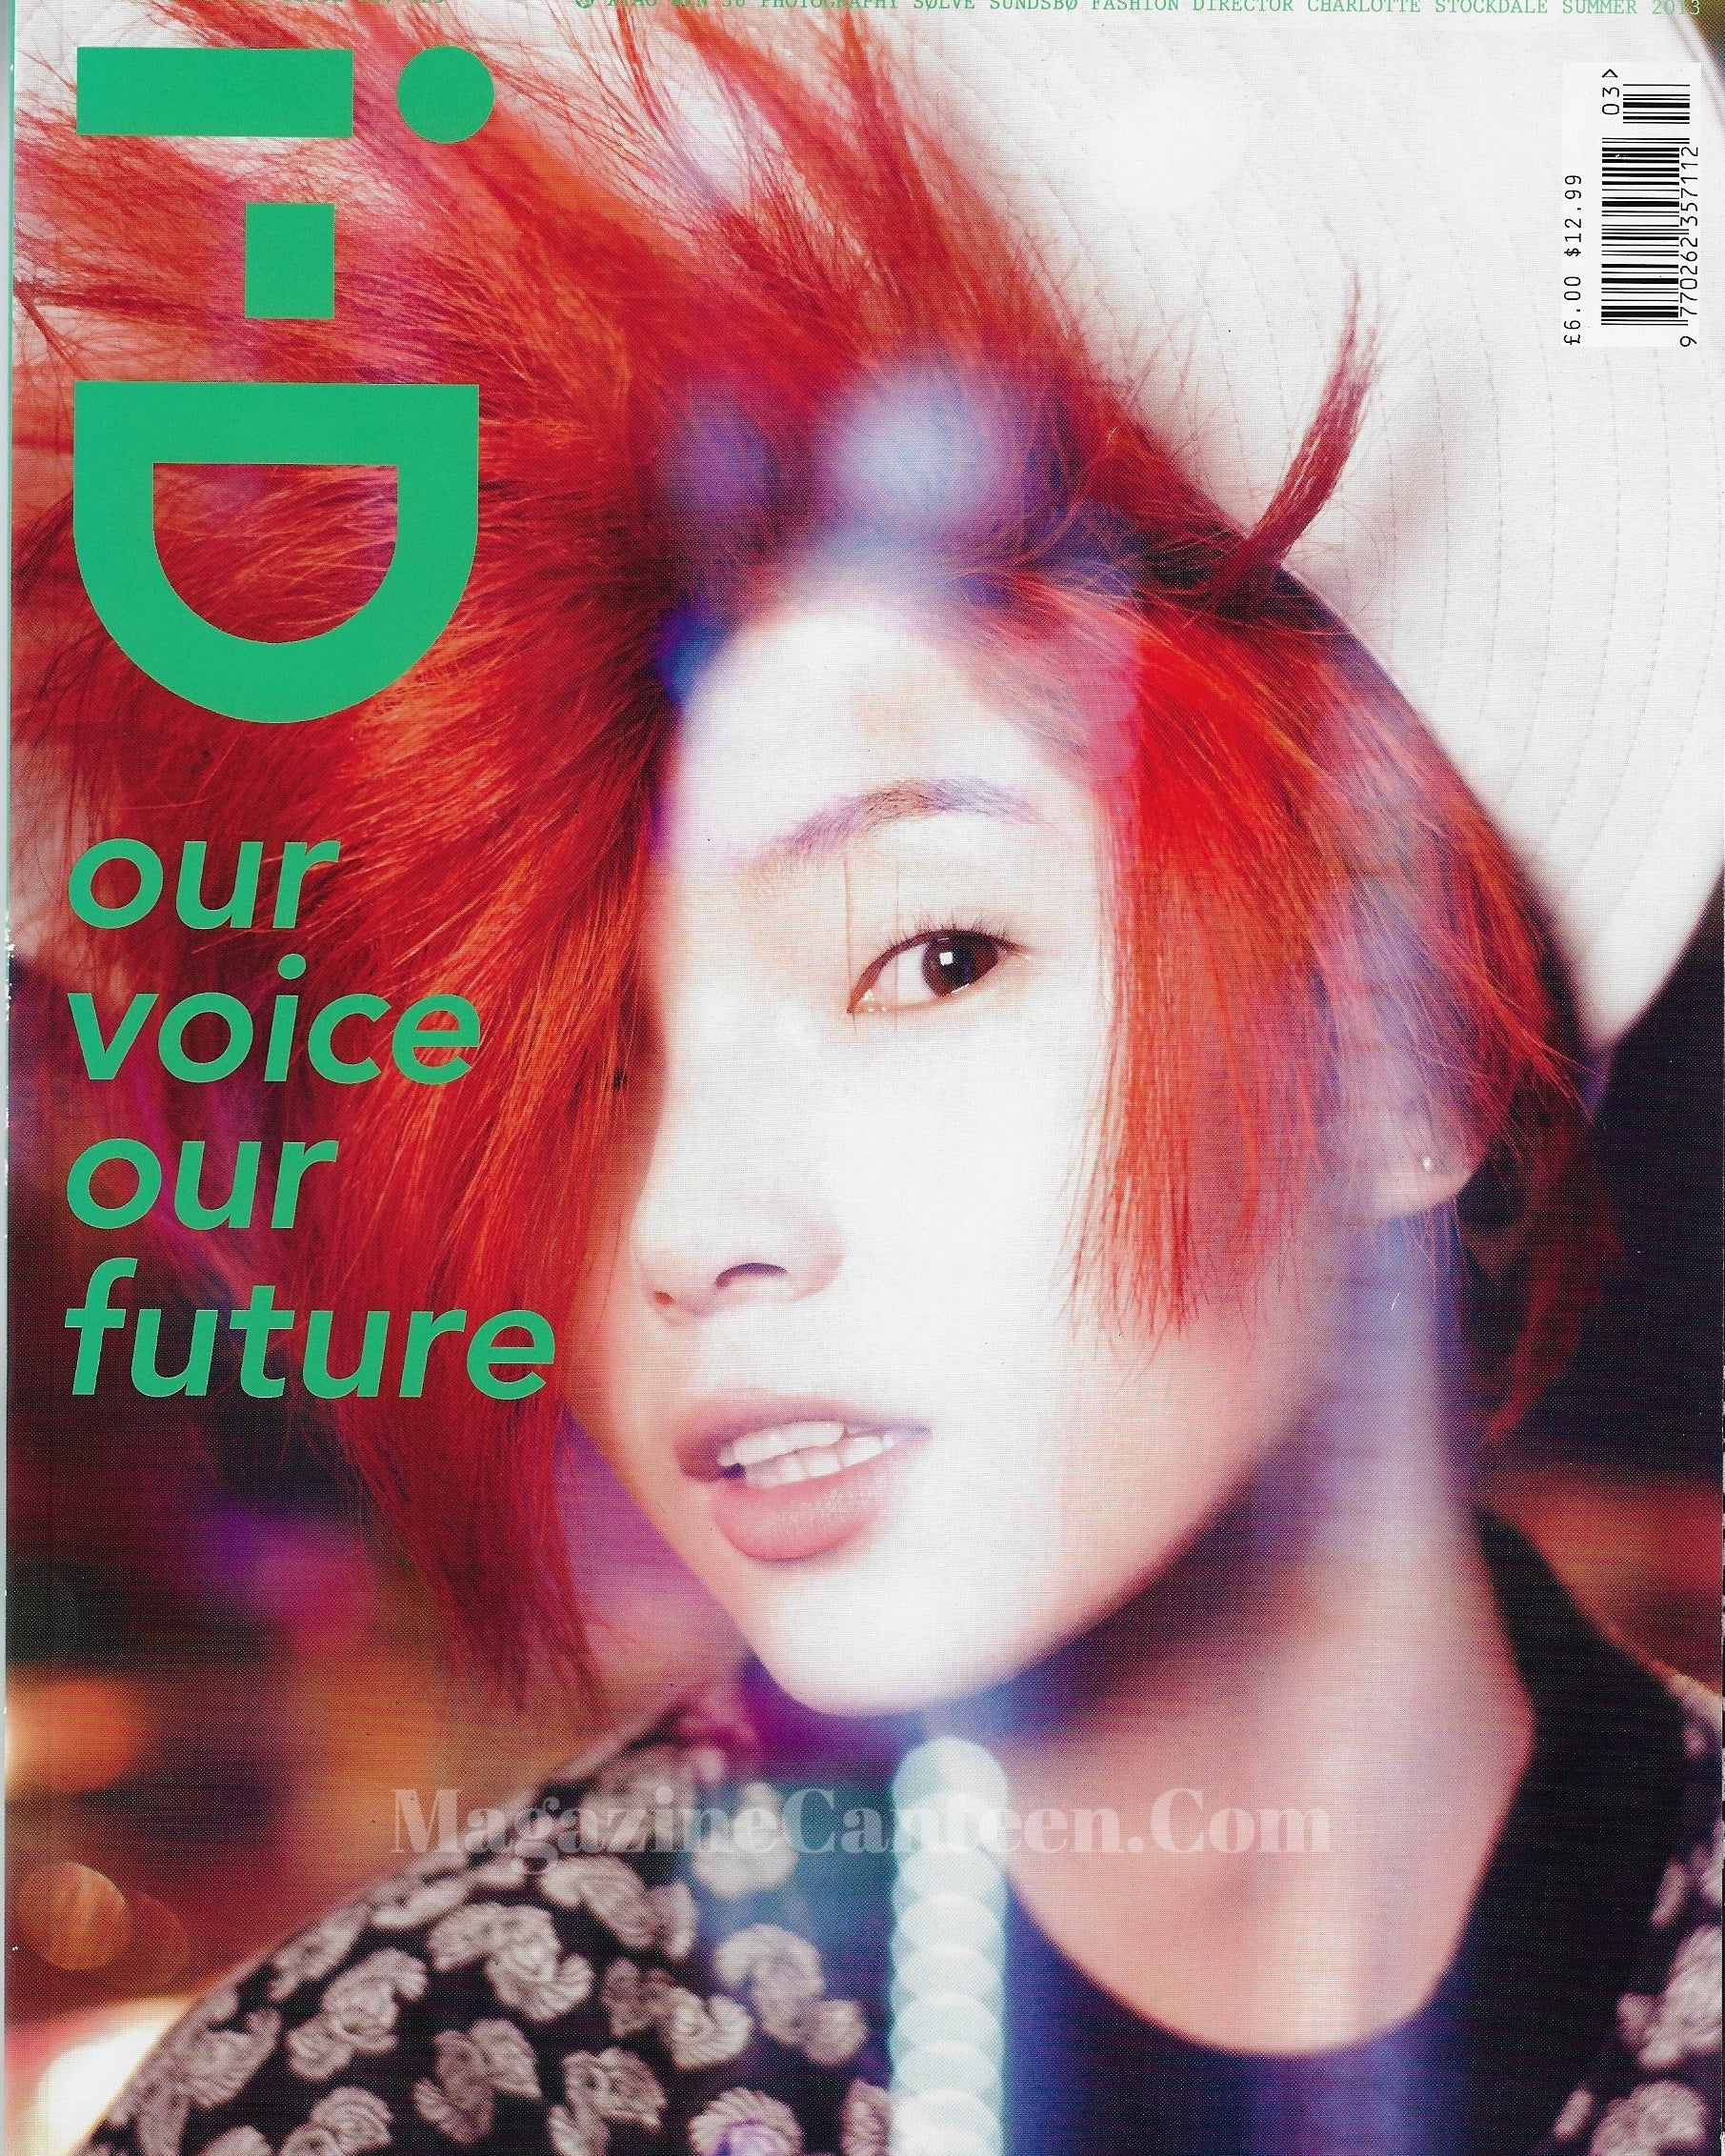 I-D Magazine 325 - Klao Wen Ju 2013